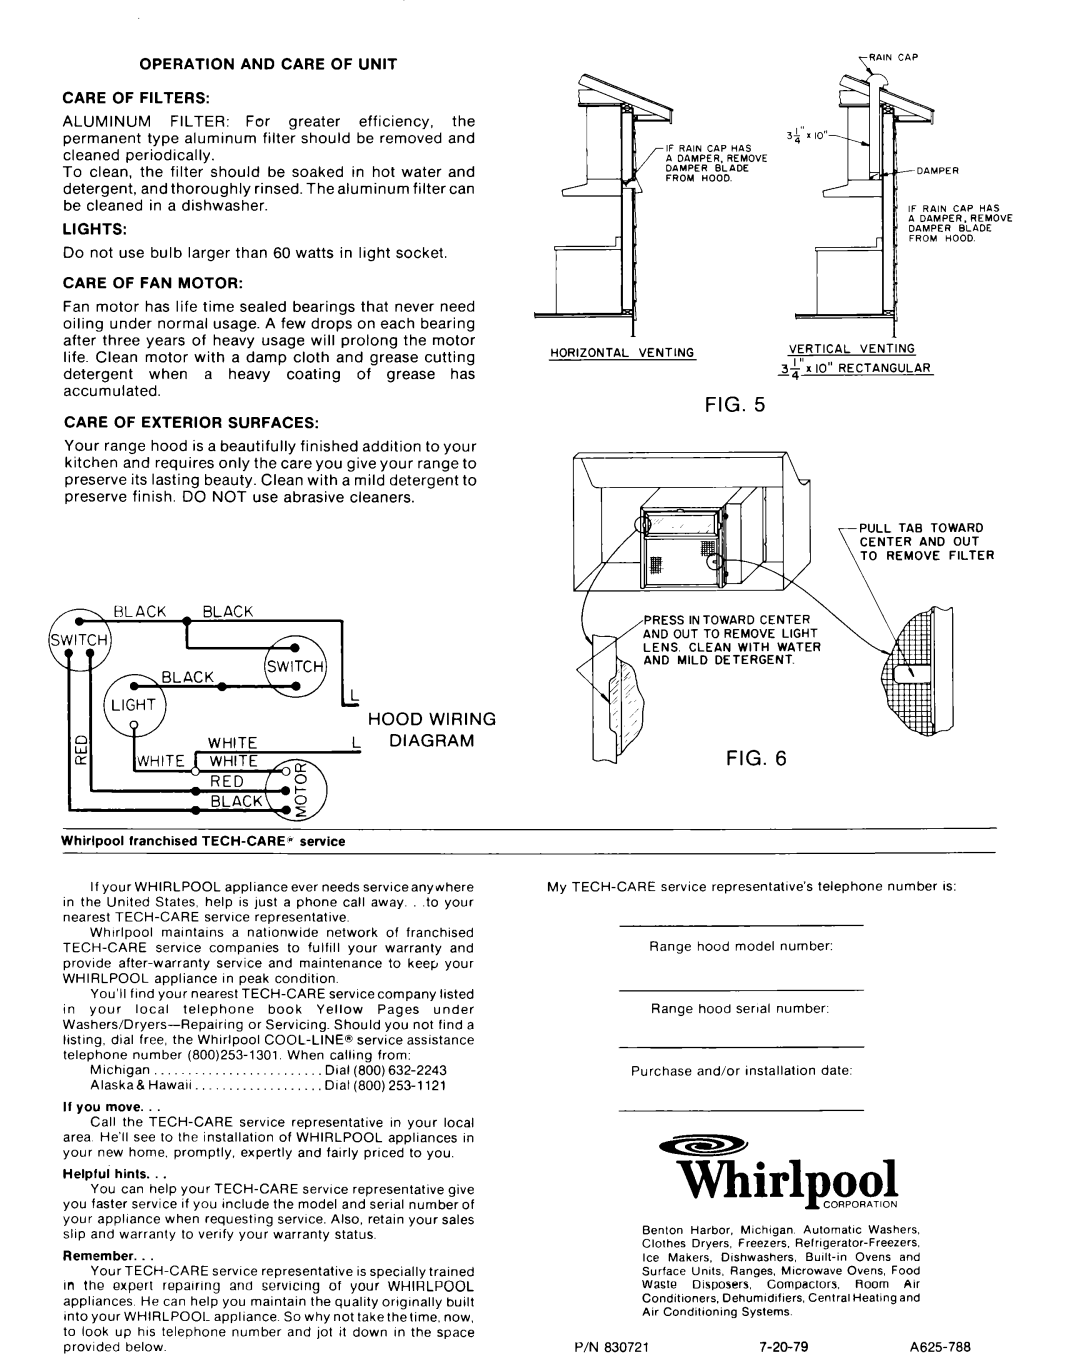 Whirlpool RHH 2300 dimensions Hood Wiring Diagram, Tklpool 